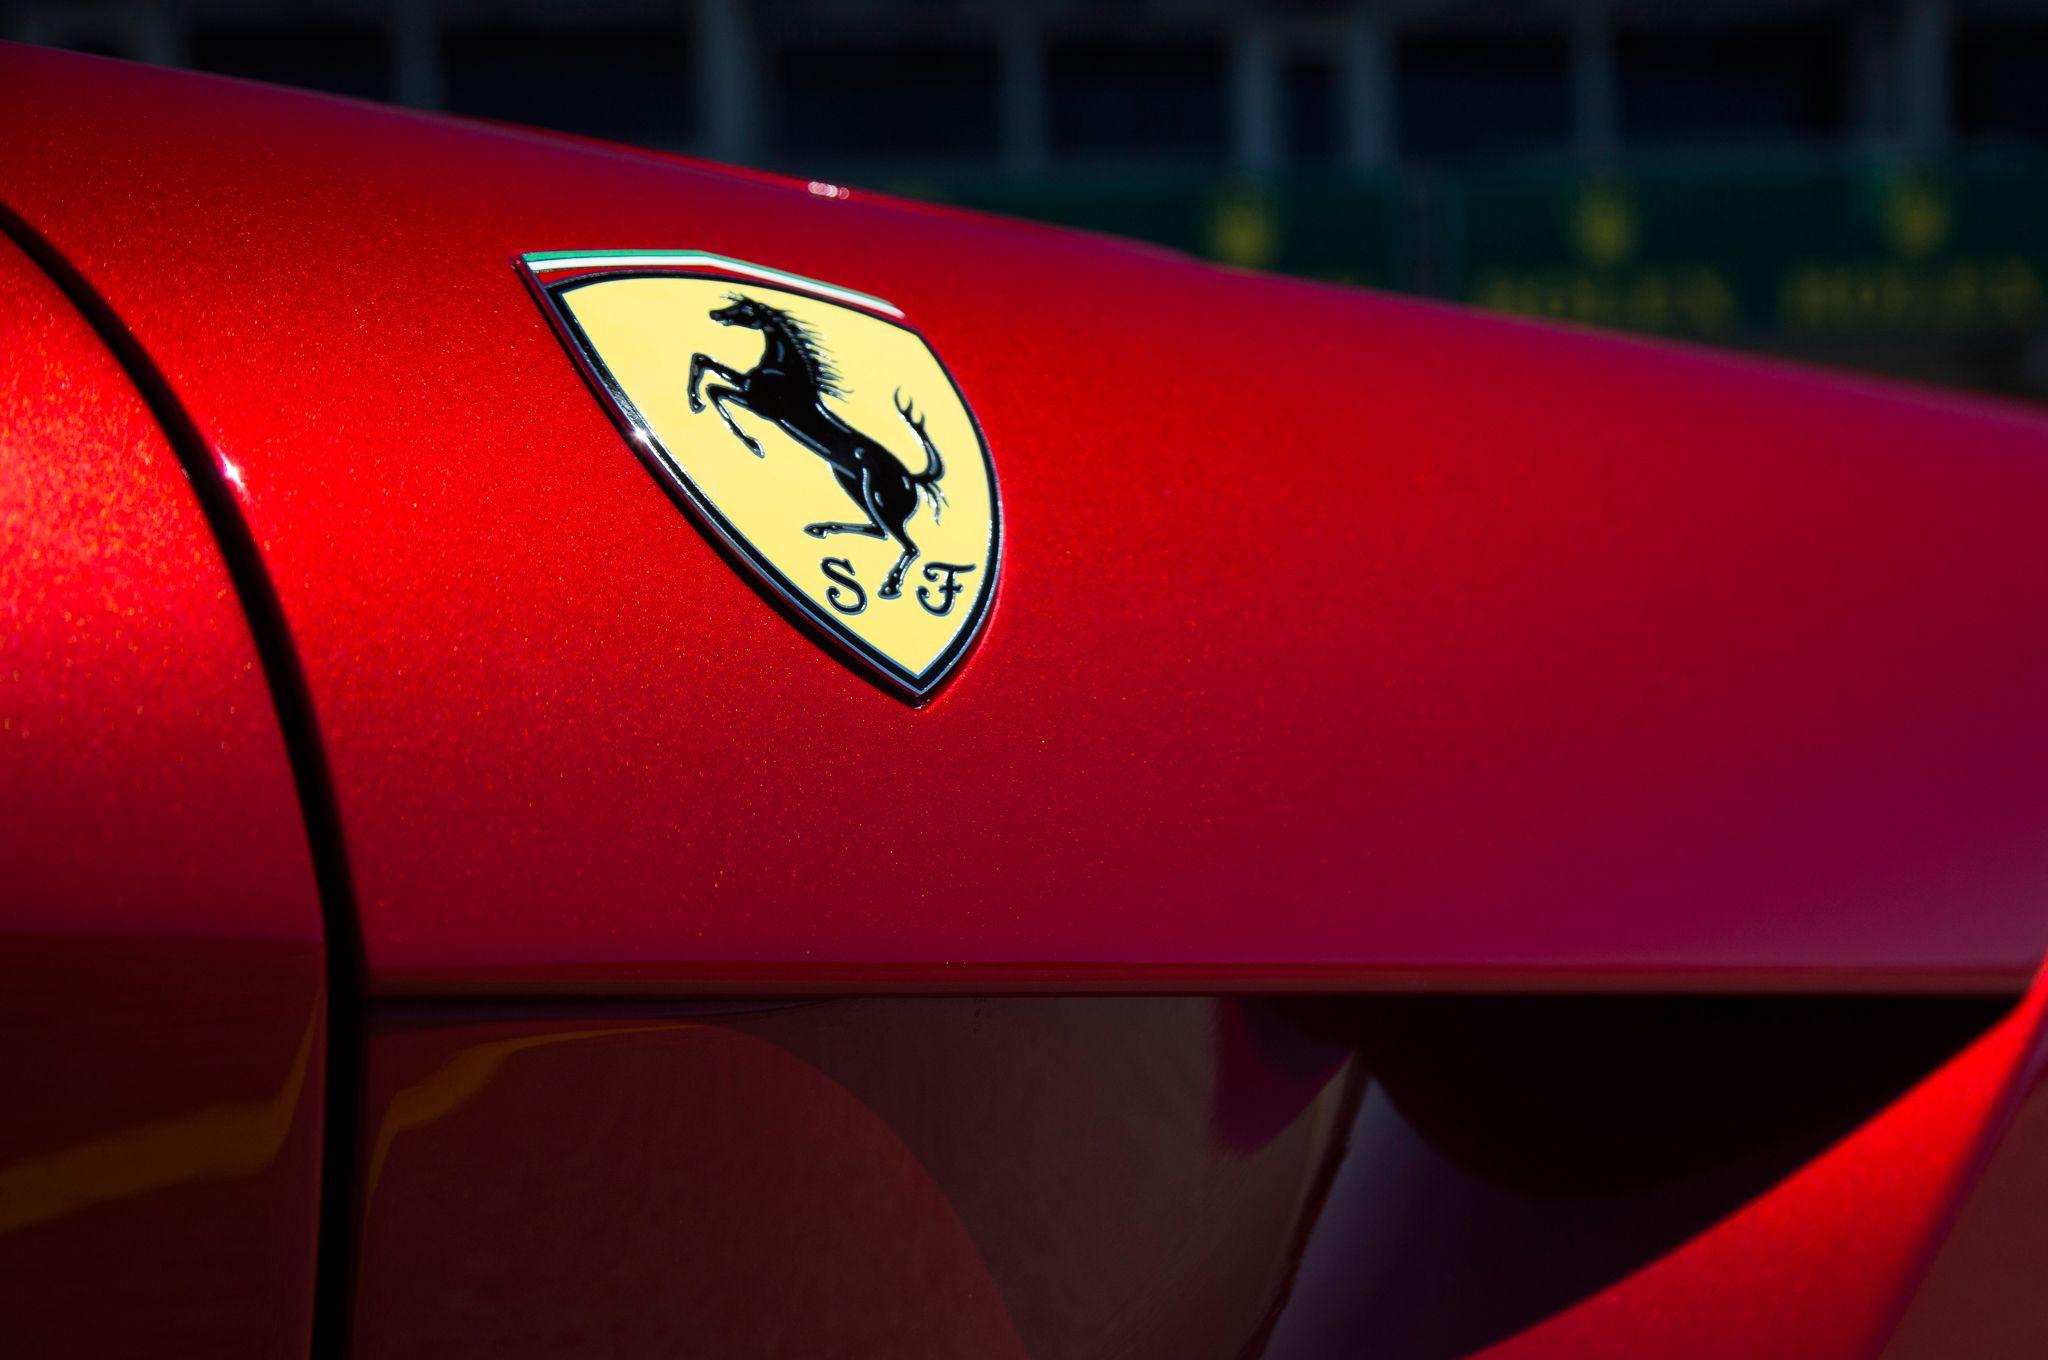 Berlinetta Logo - ITDC 17 - Ferrari pitstop for Genero developers - Genero programming ...